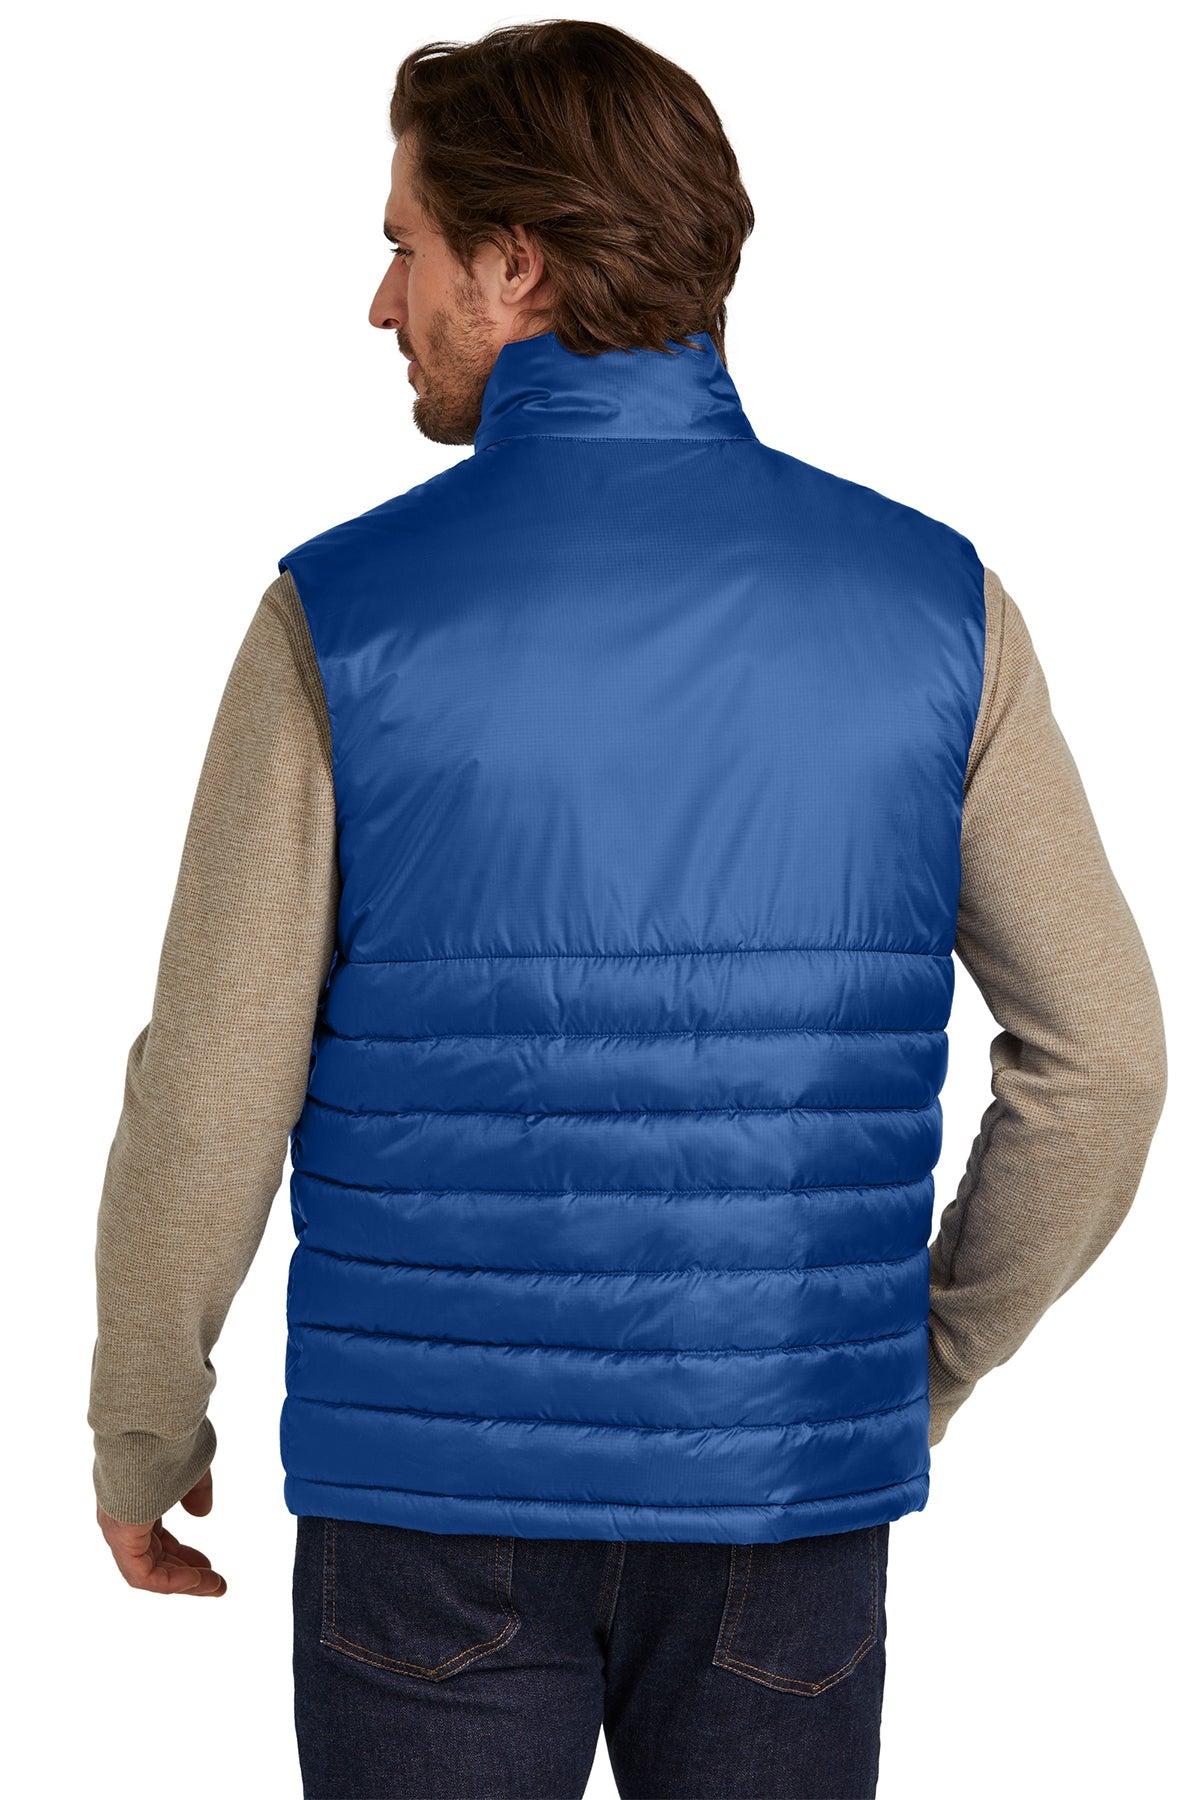 Eddie Bauer Customized Quilted Vests, Cobalt Blue